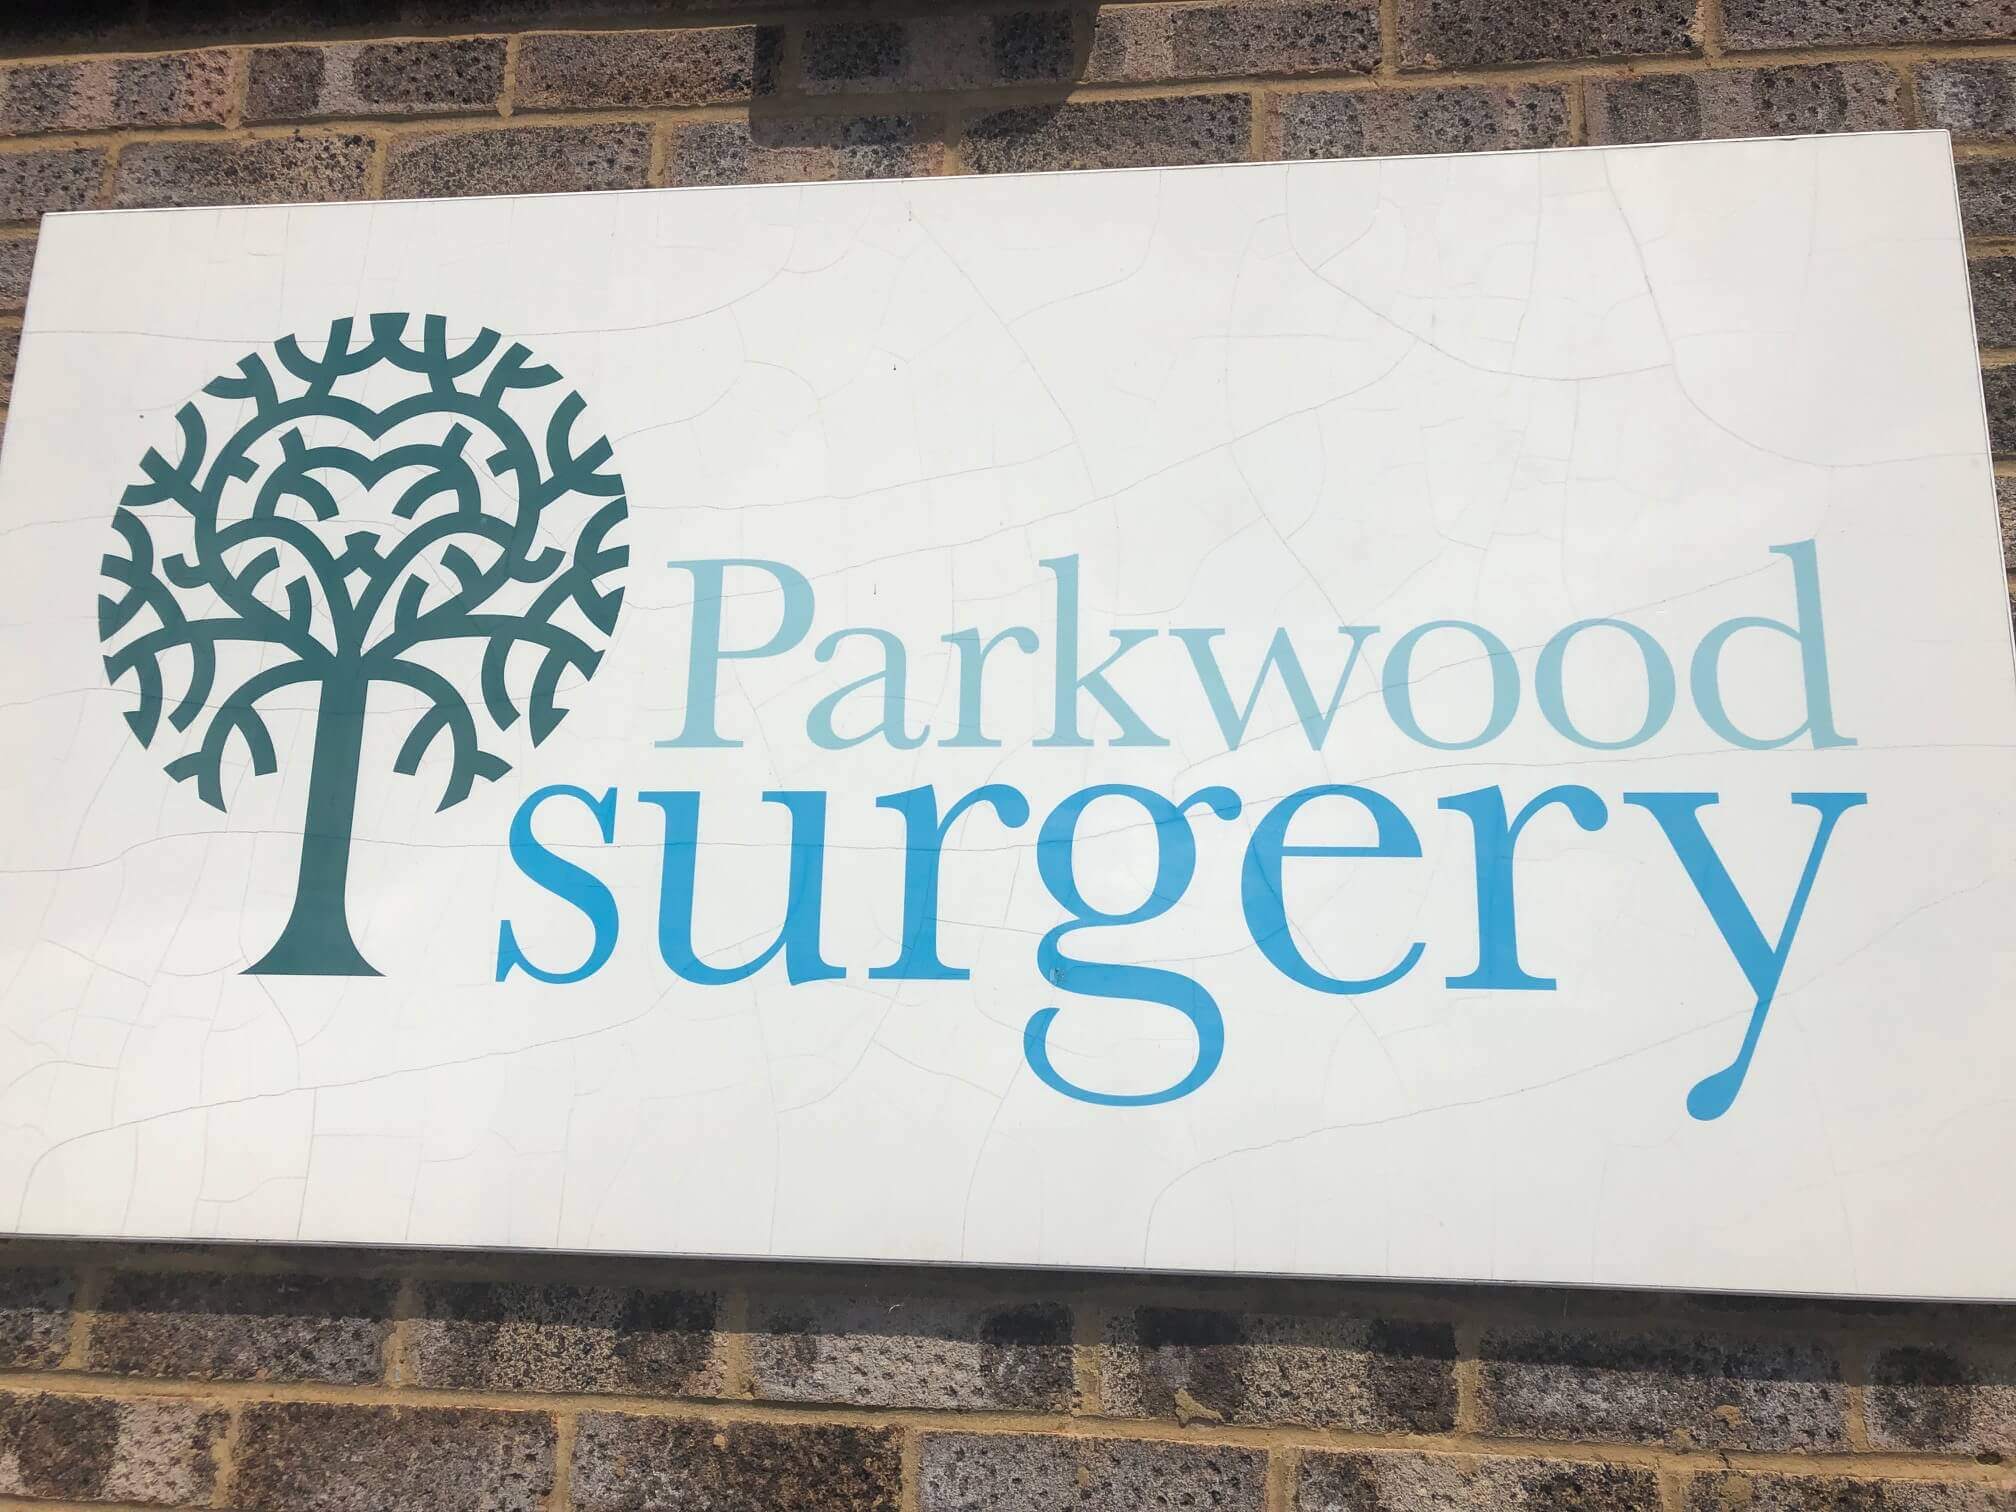 Licence Bureau supports Parkwood surgery